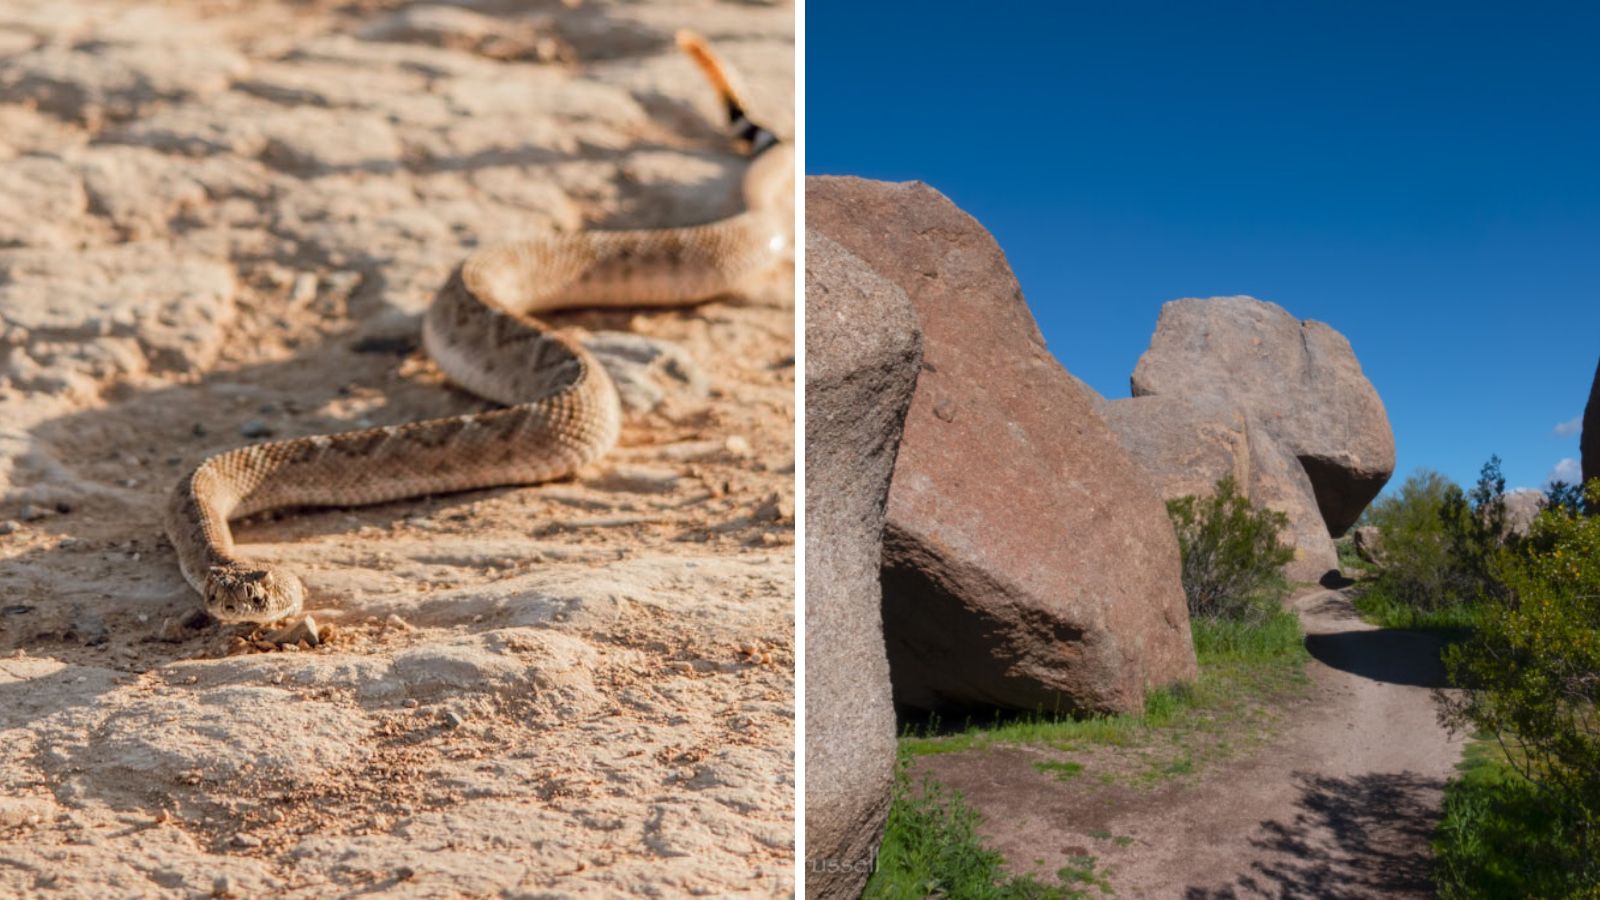 Rattlesnake bites 3-year-old boy on Scottsdale hiking trail